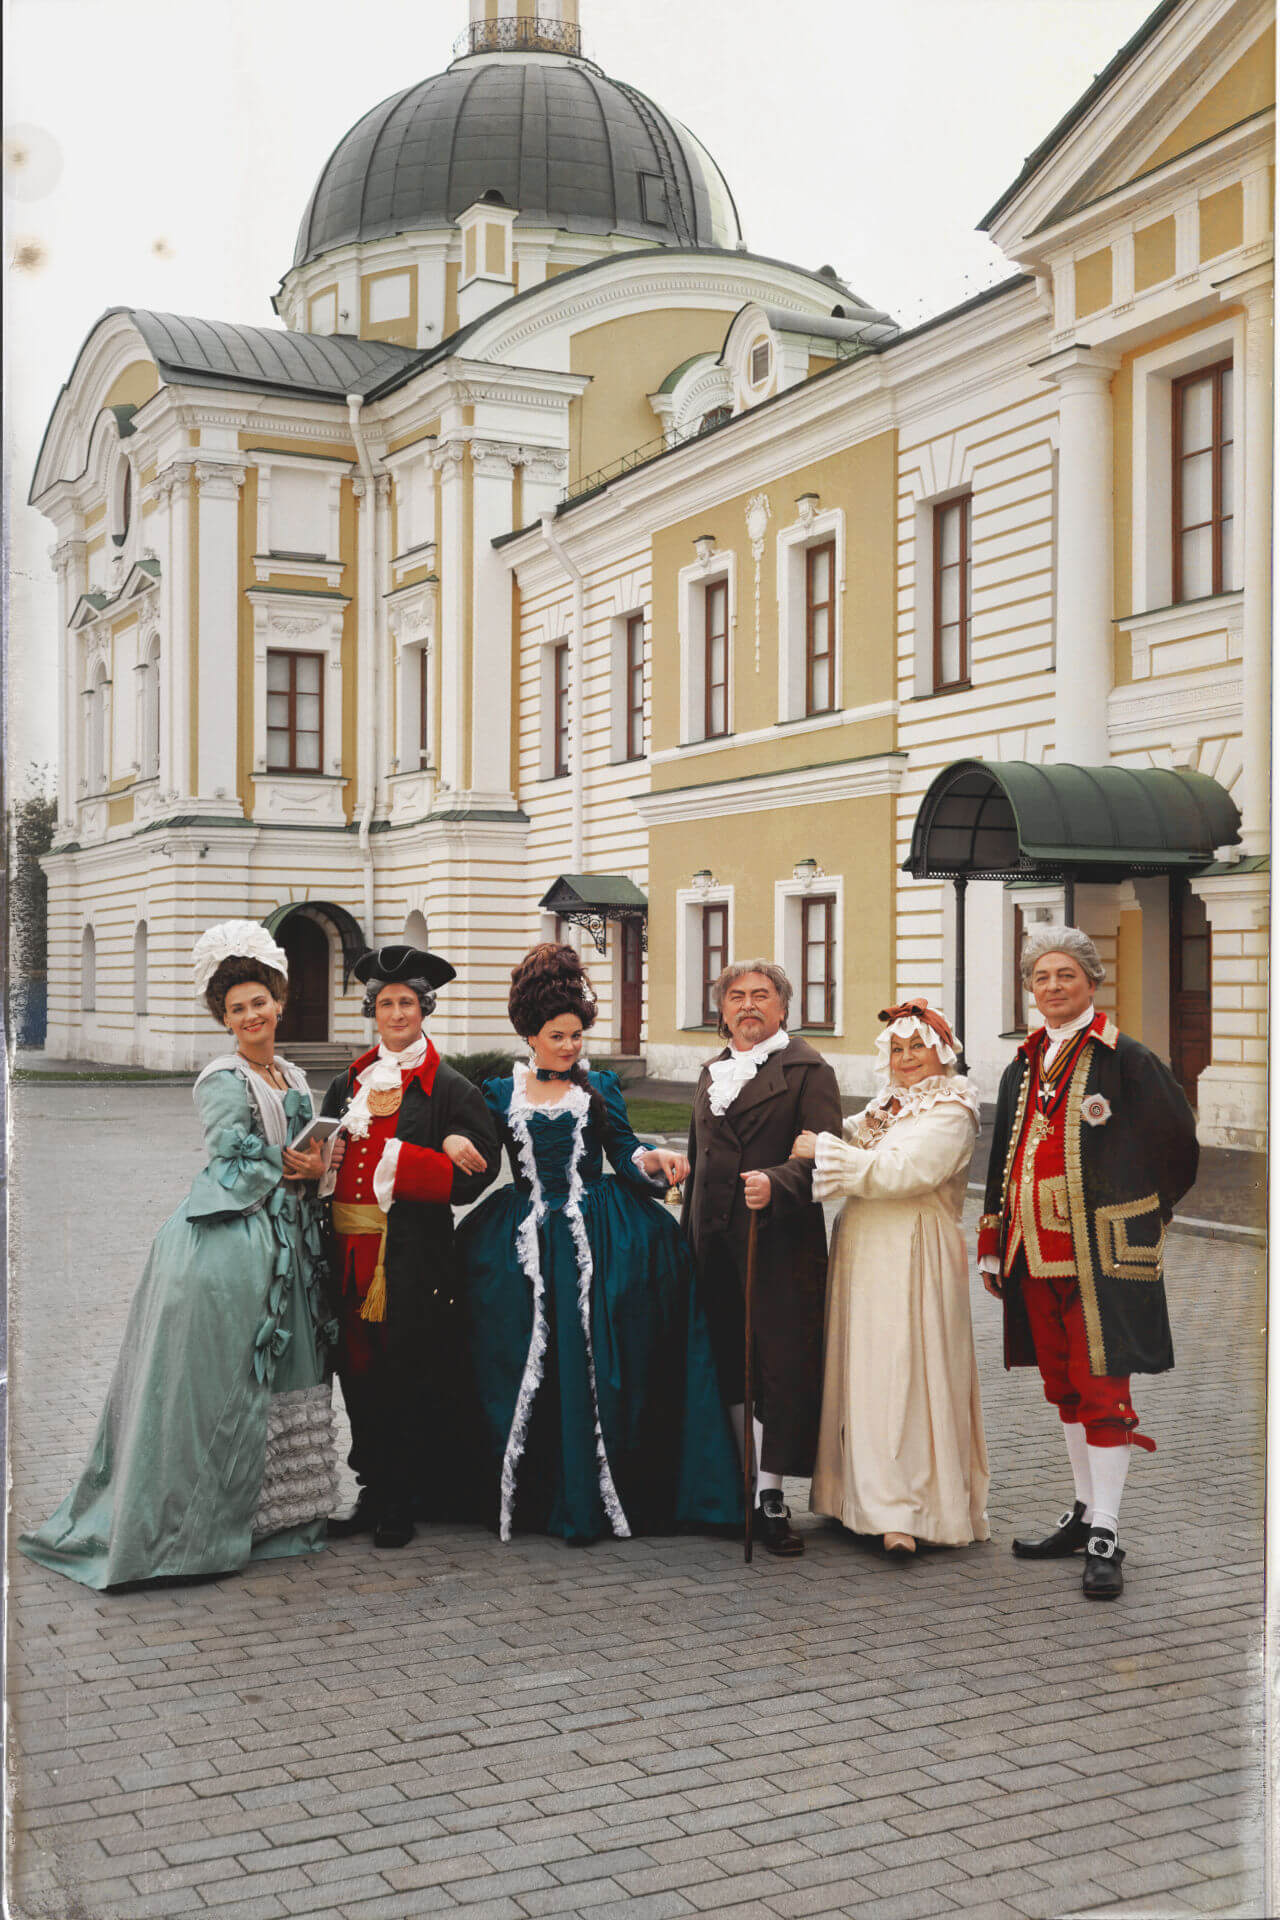 Персонажи оживших полотен на фоне Императорского дворца.